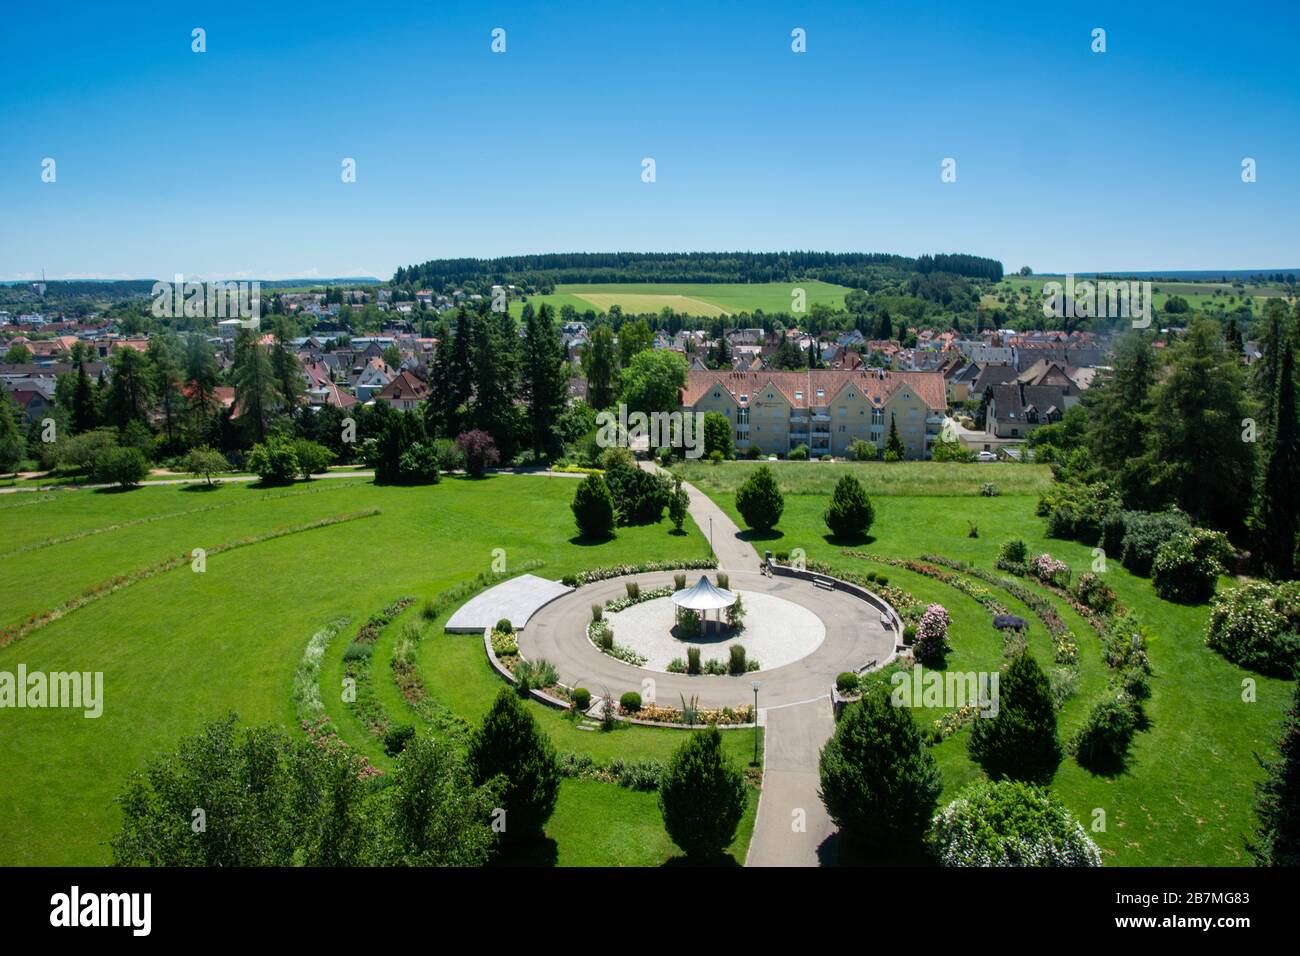 Hubenlochpark - Rose garden in Villingen in the Black Forest / Germany Stock Photo